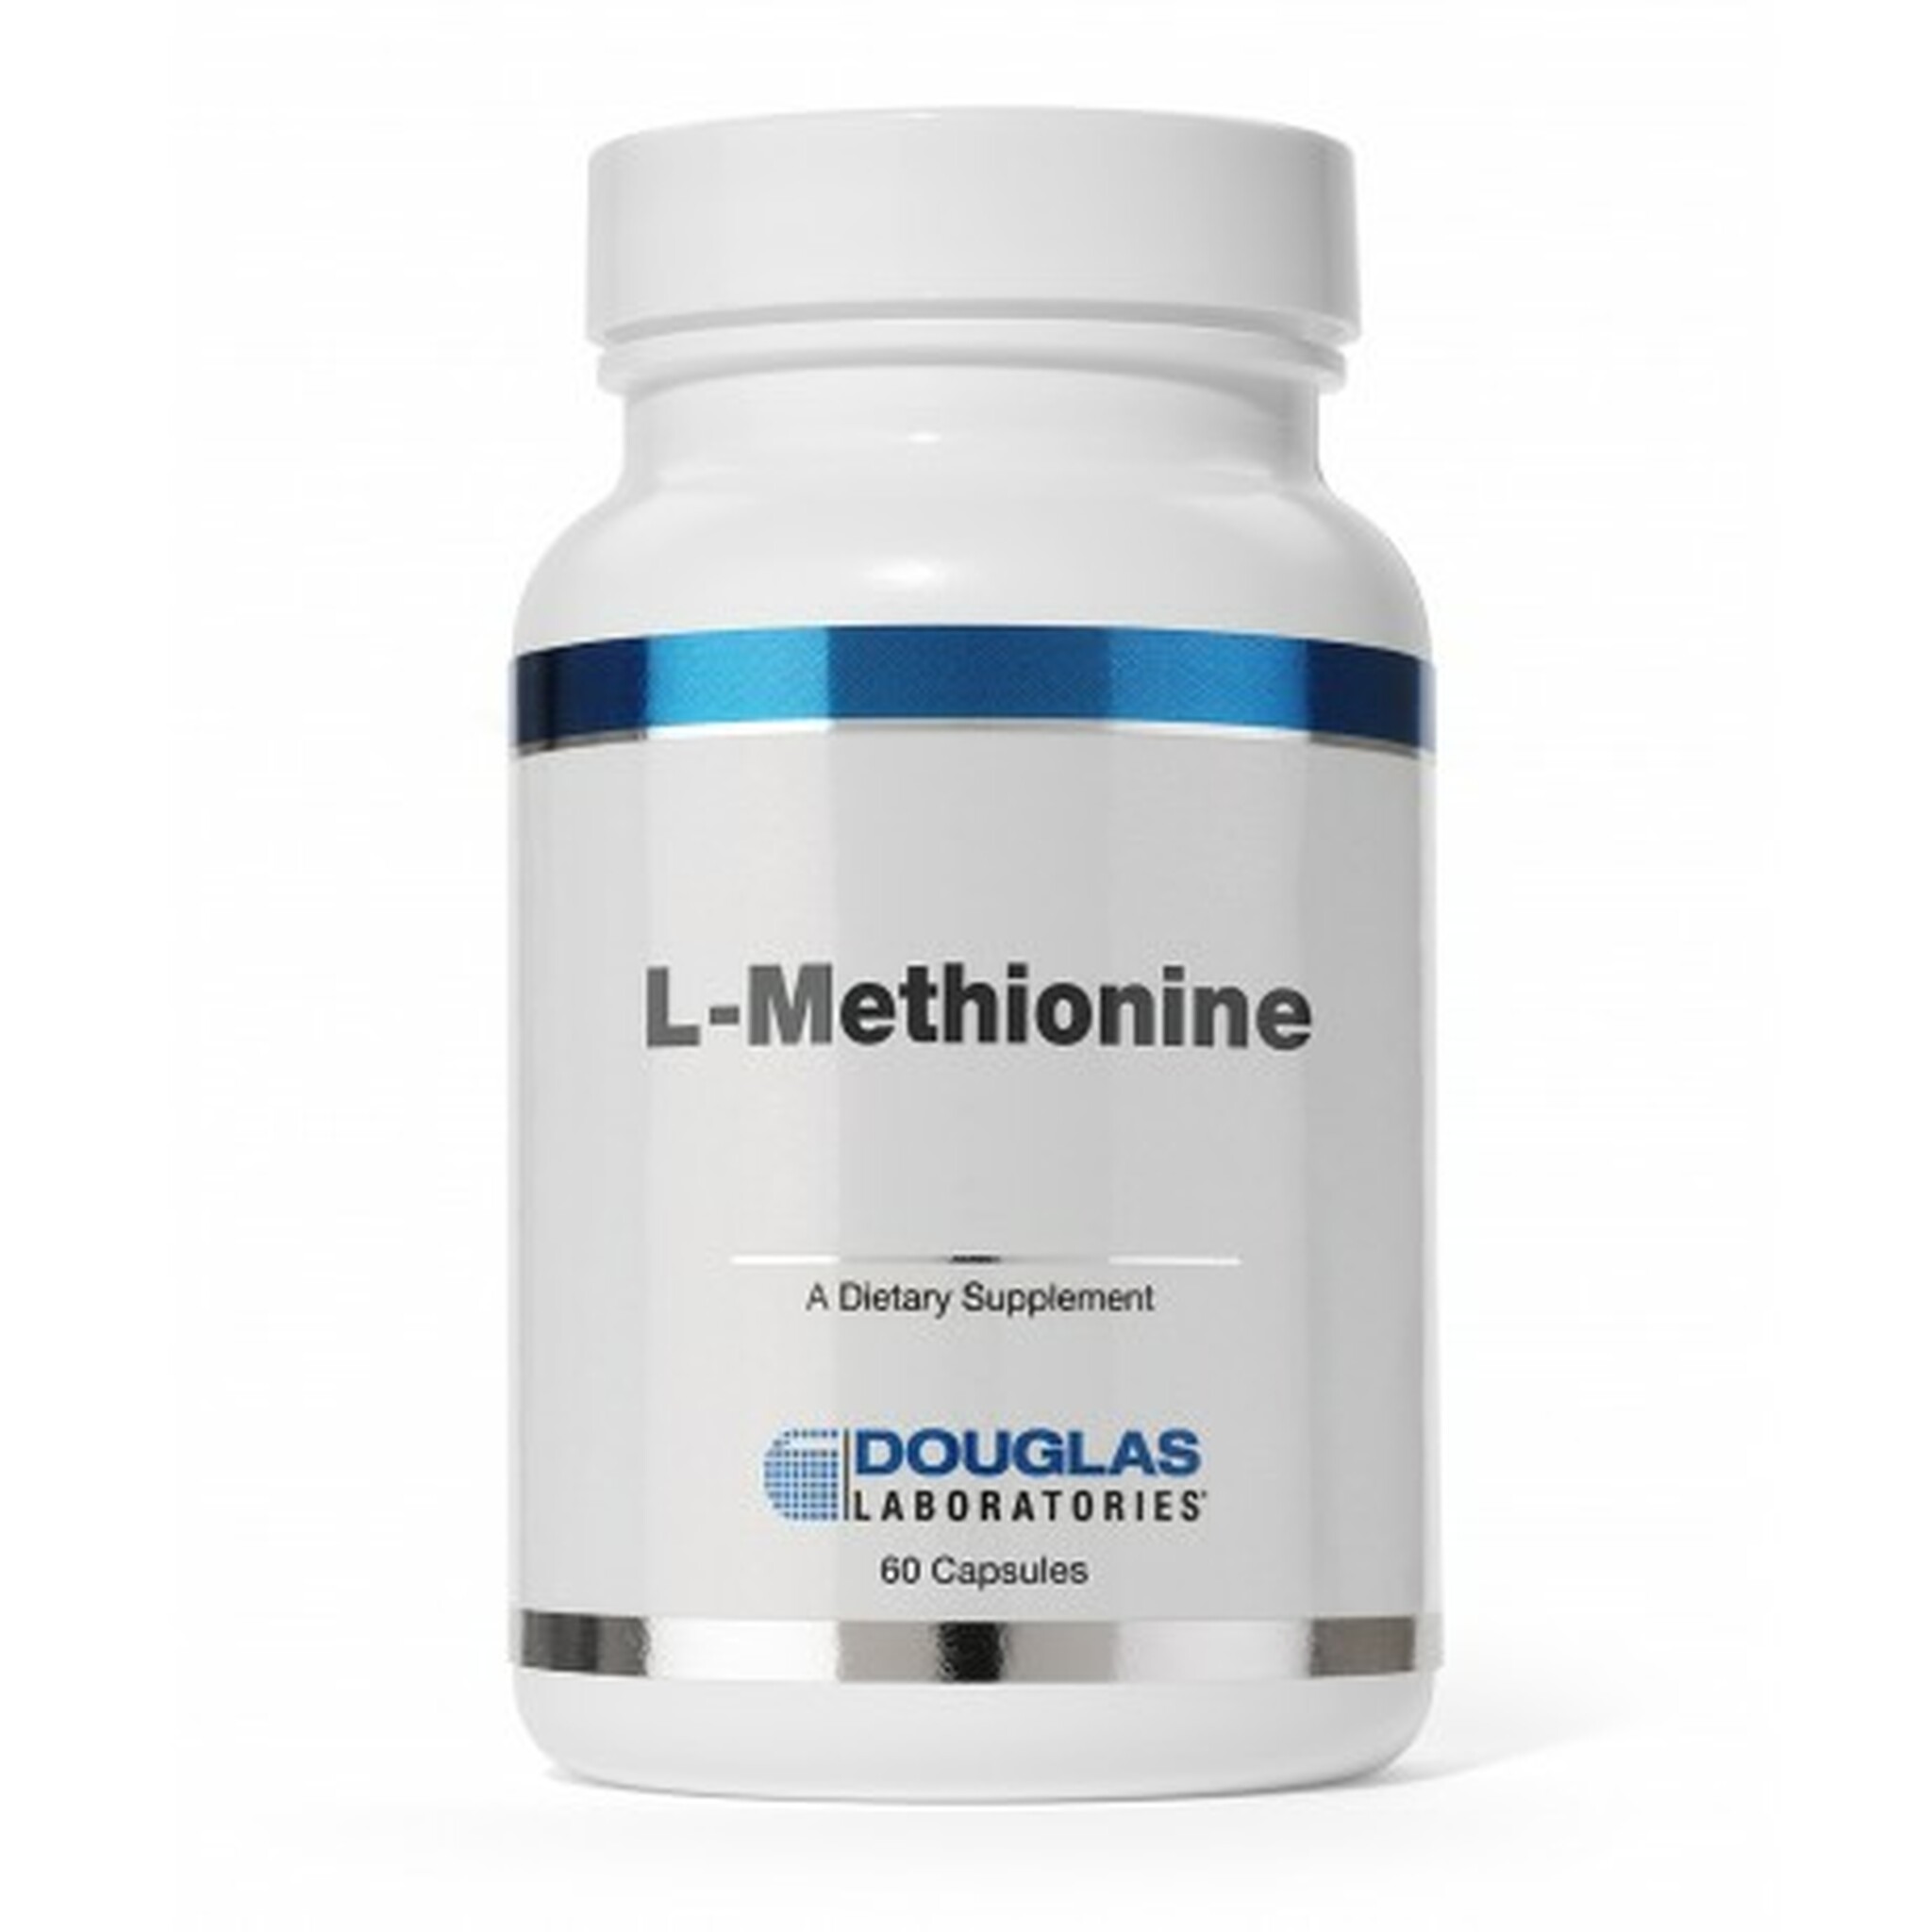 L-METHIONINE